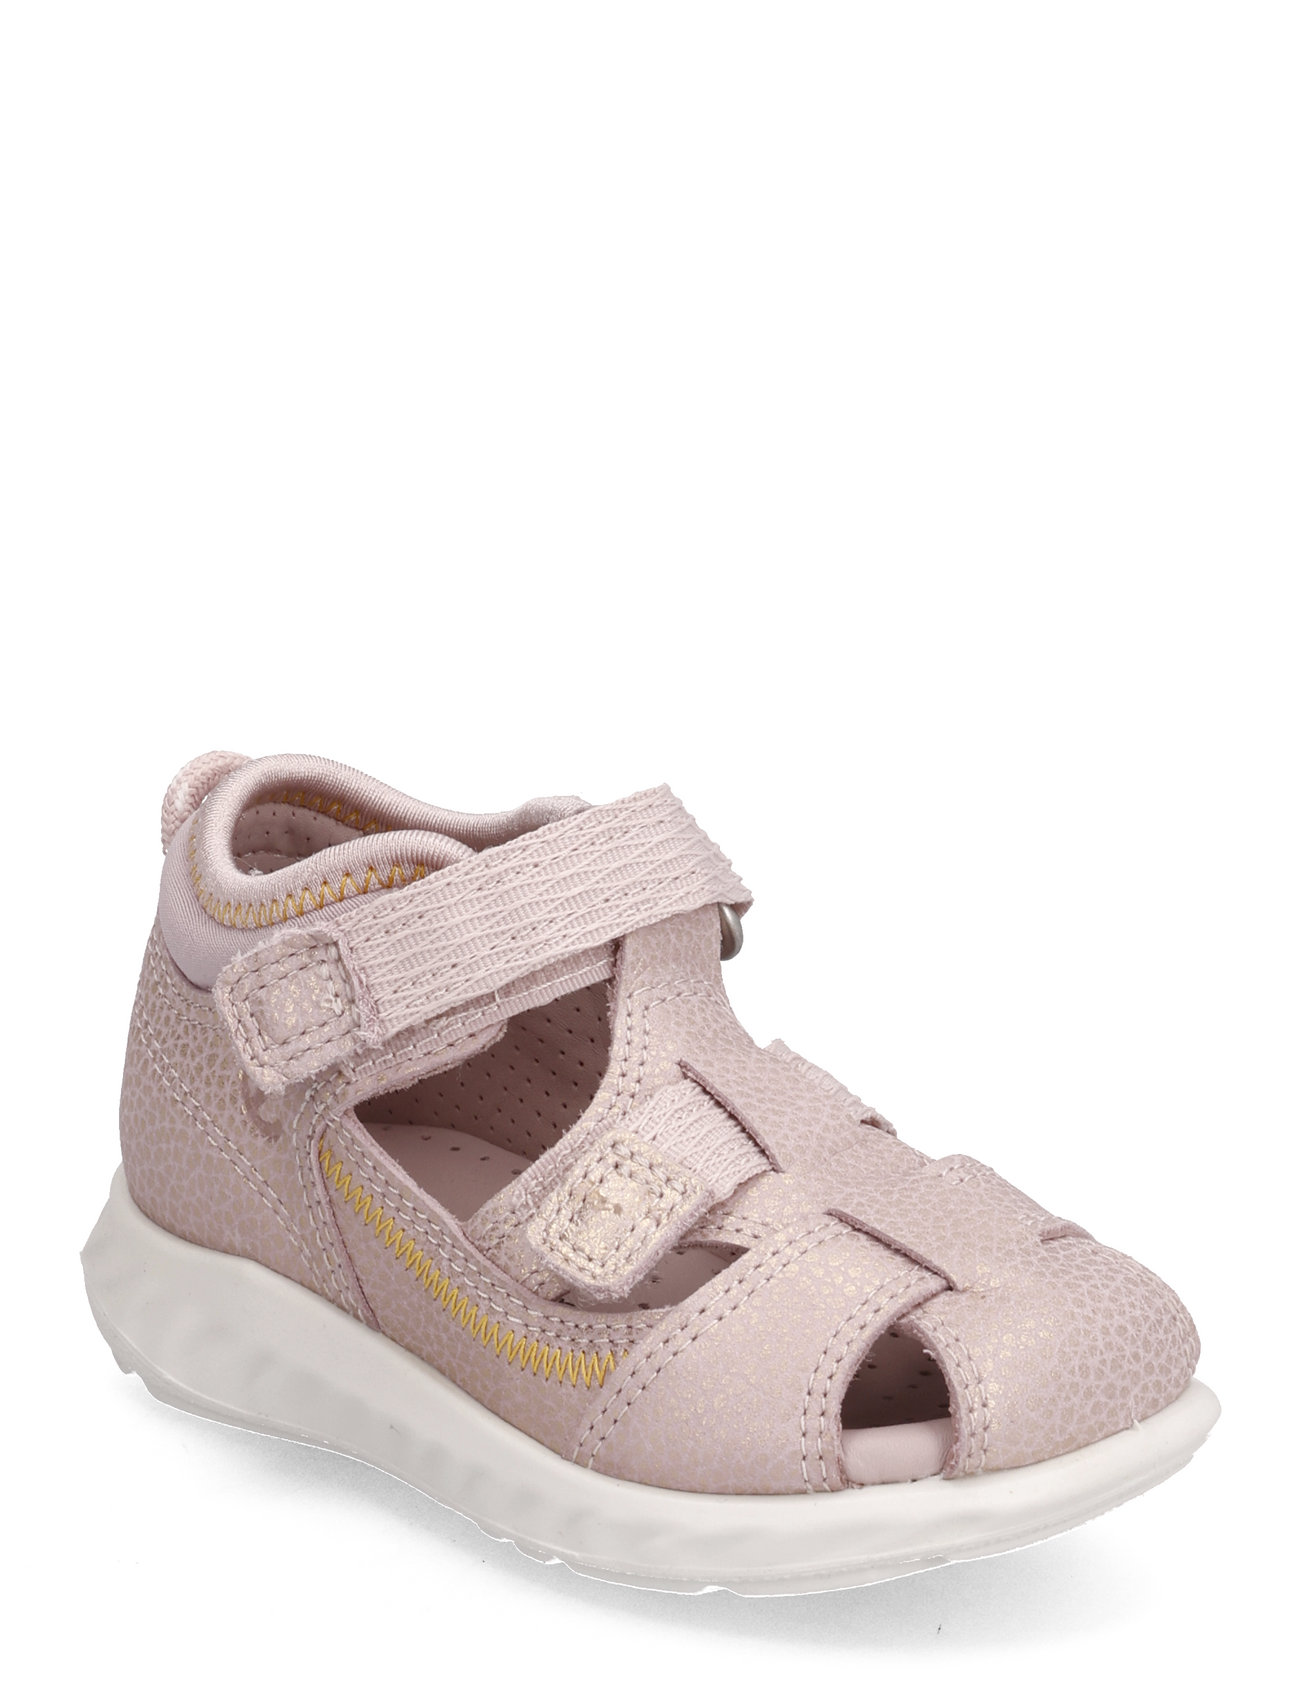 ECCO Sp1 Lite Infant Sandal - Boozt.com